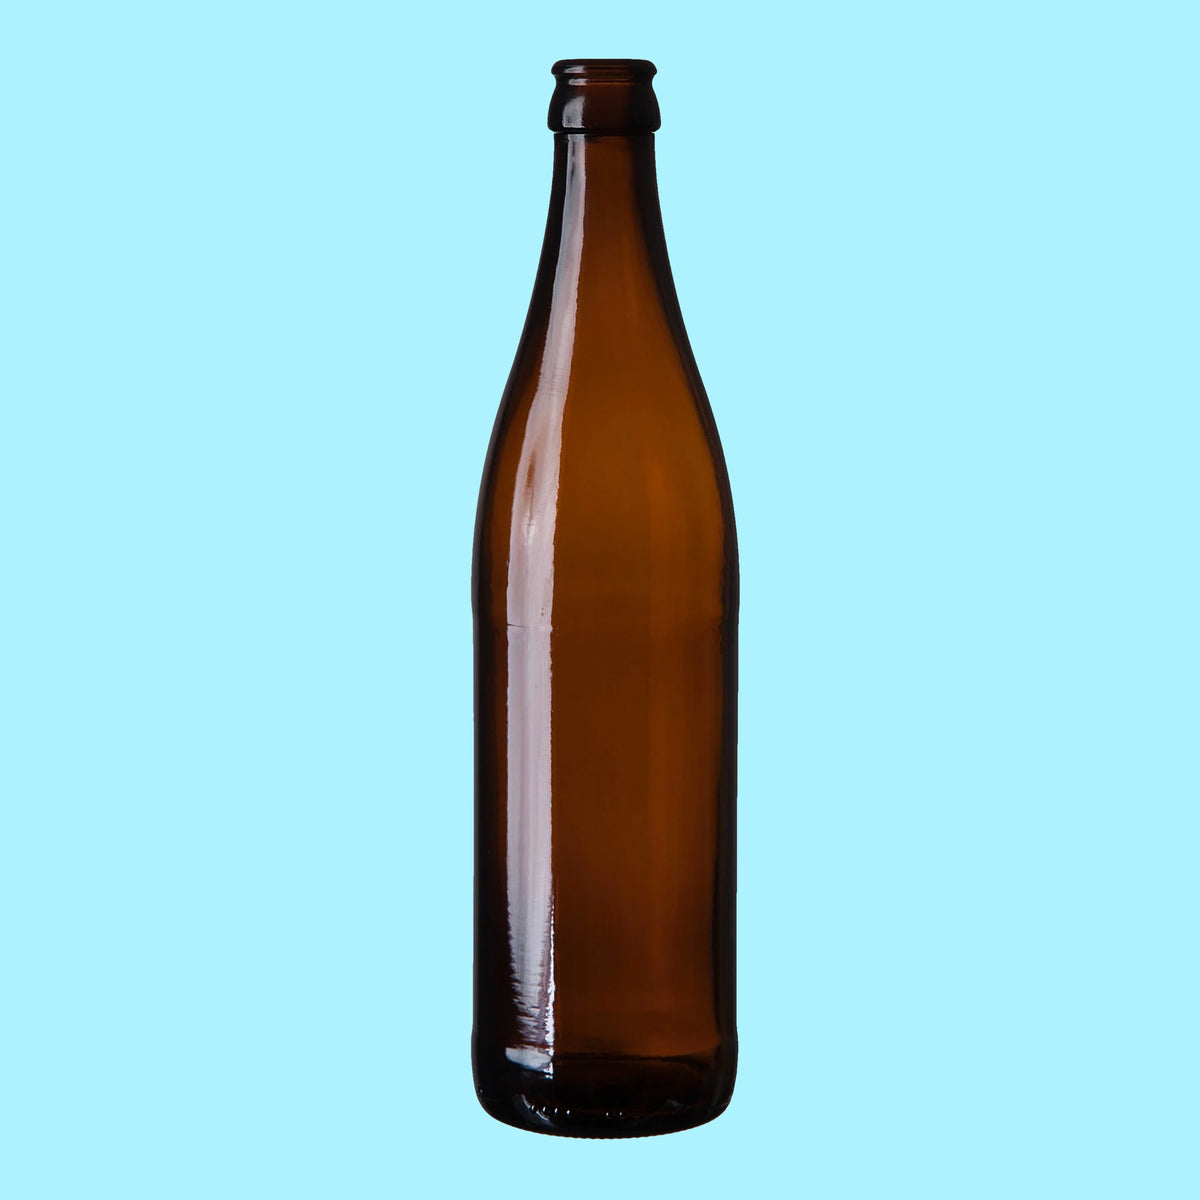 Vichy - 500ml Amber Beer Bottle (Case of 12)